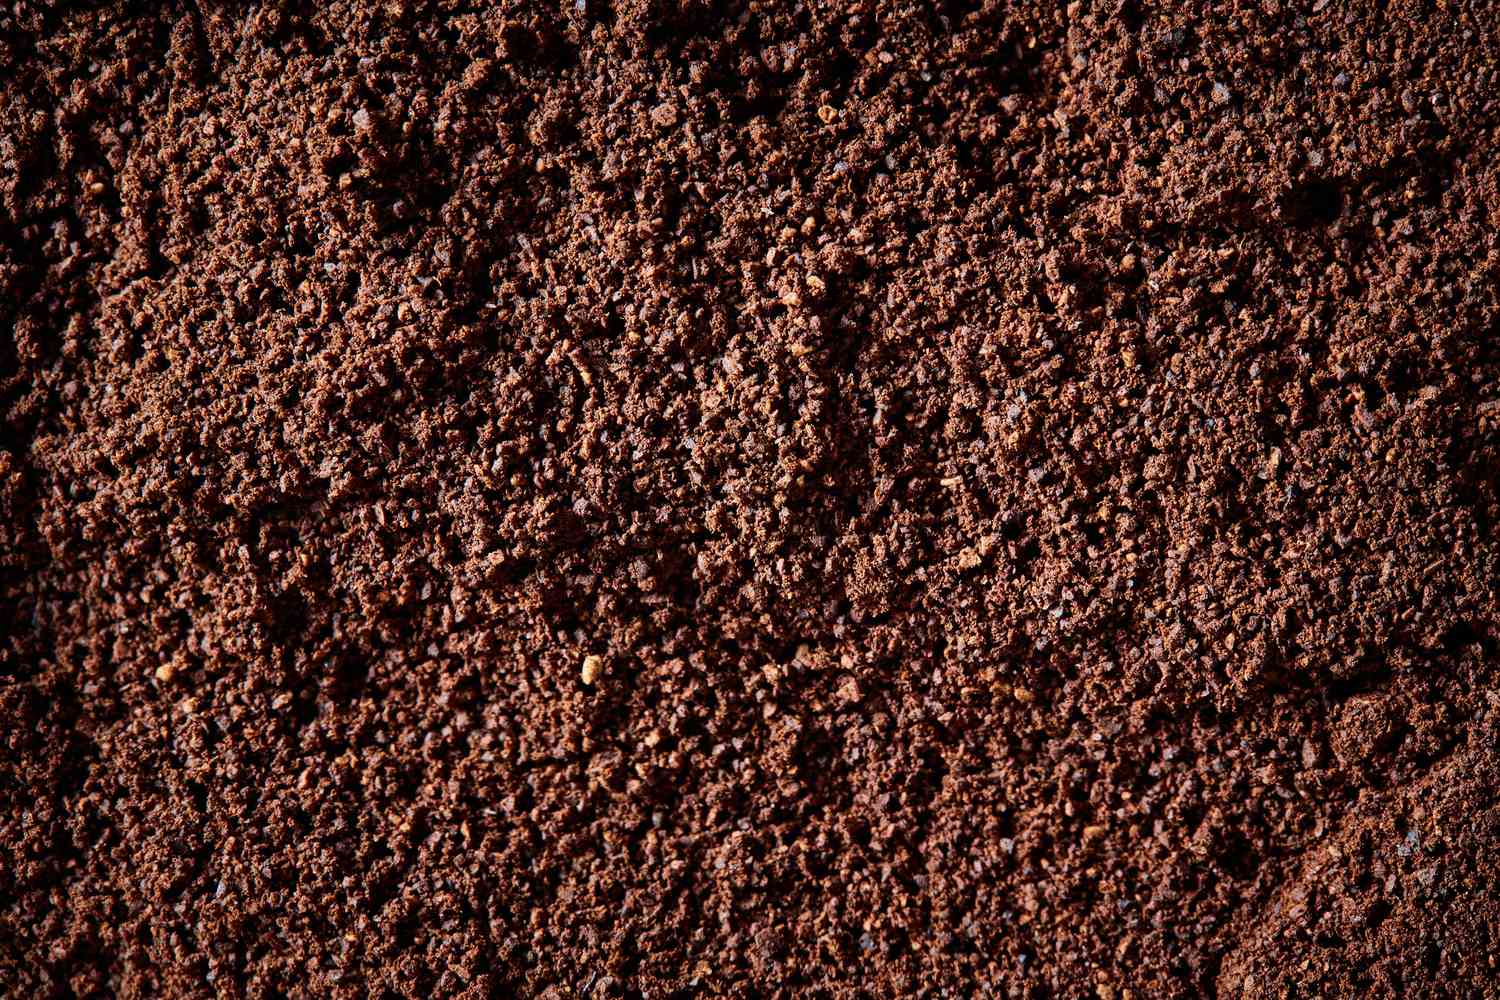 primer plano de la textura de la harina de sangre